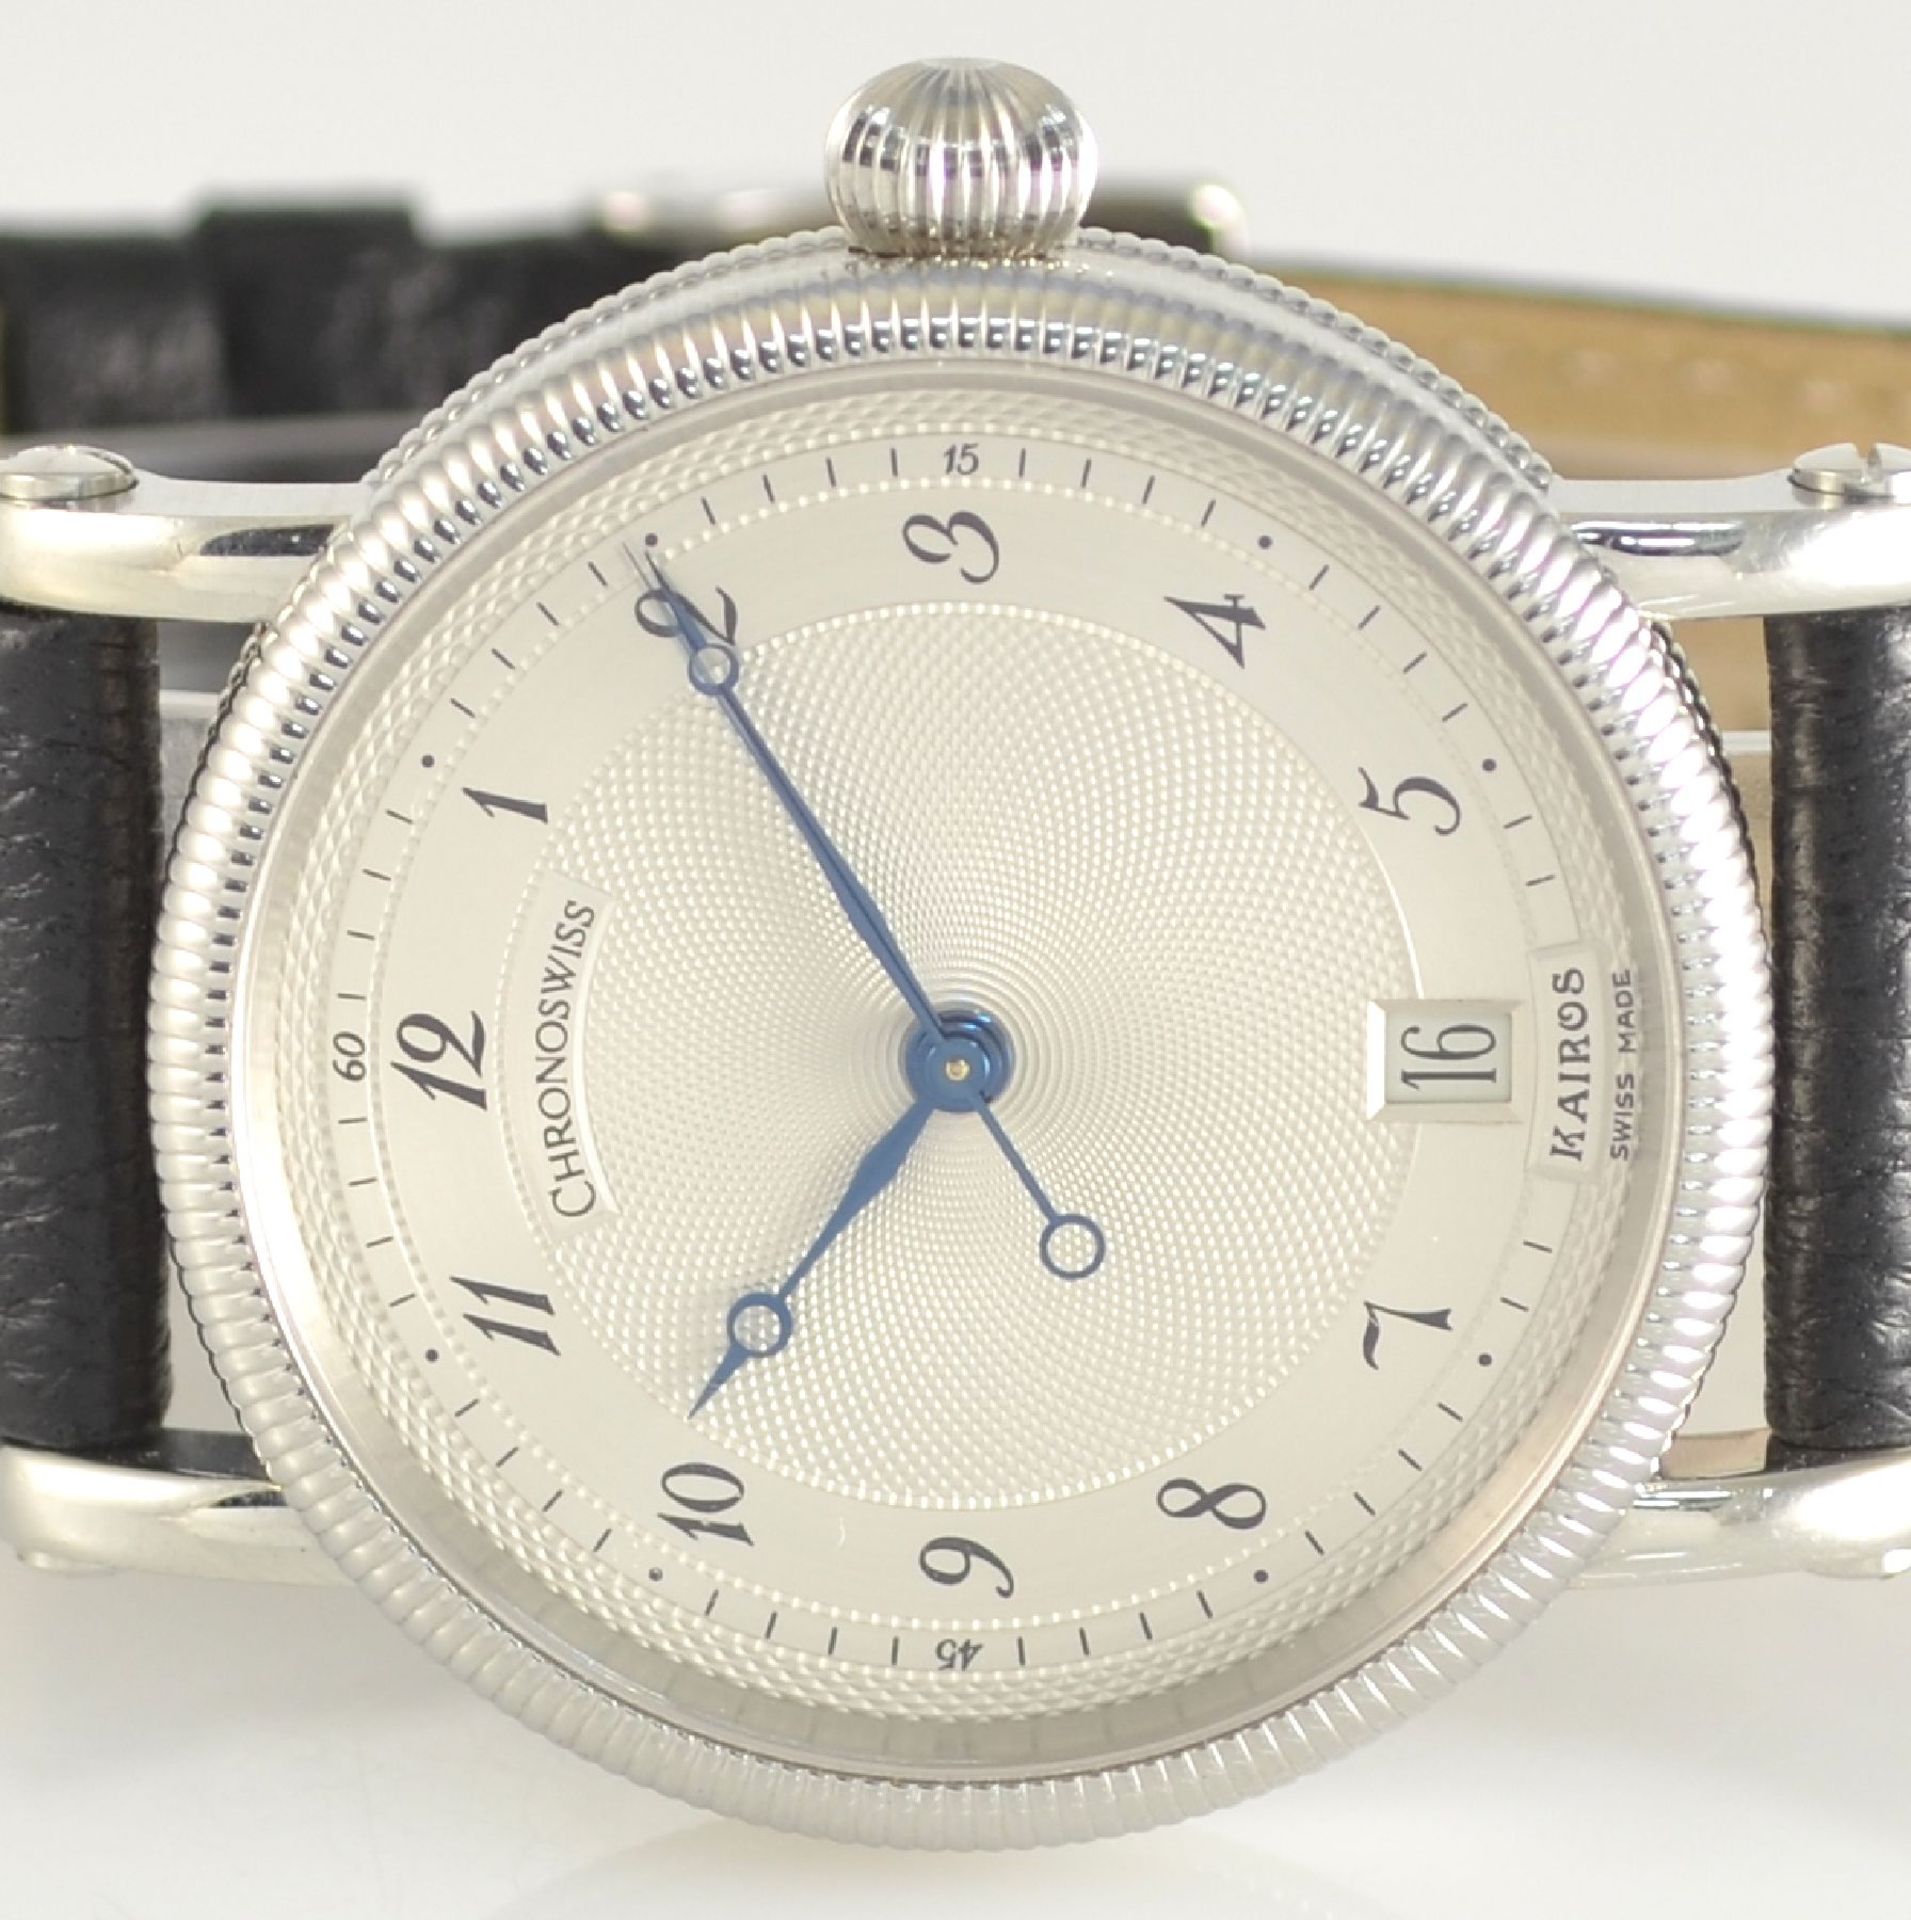 CHRONOSWISS Armbanduhr Serie Kairos, Schweiz um 1992, Automatik, Ref. CH 2823 M, beids. vergl. - Bild 2 aus 8